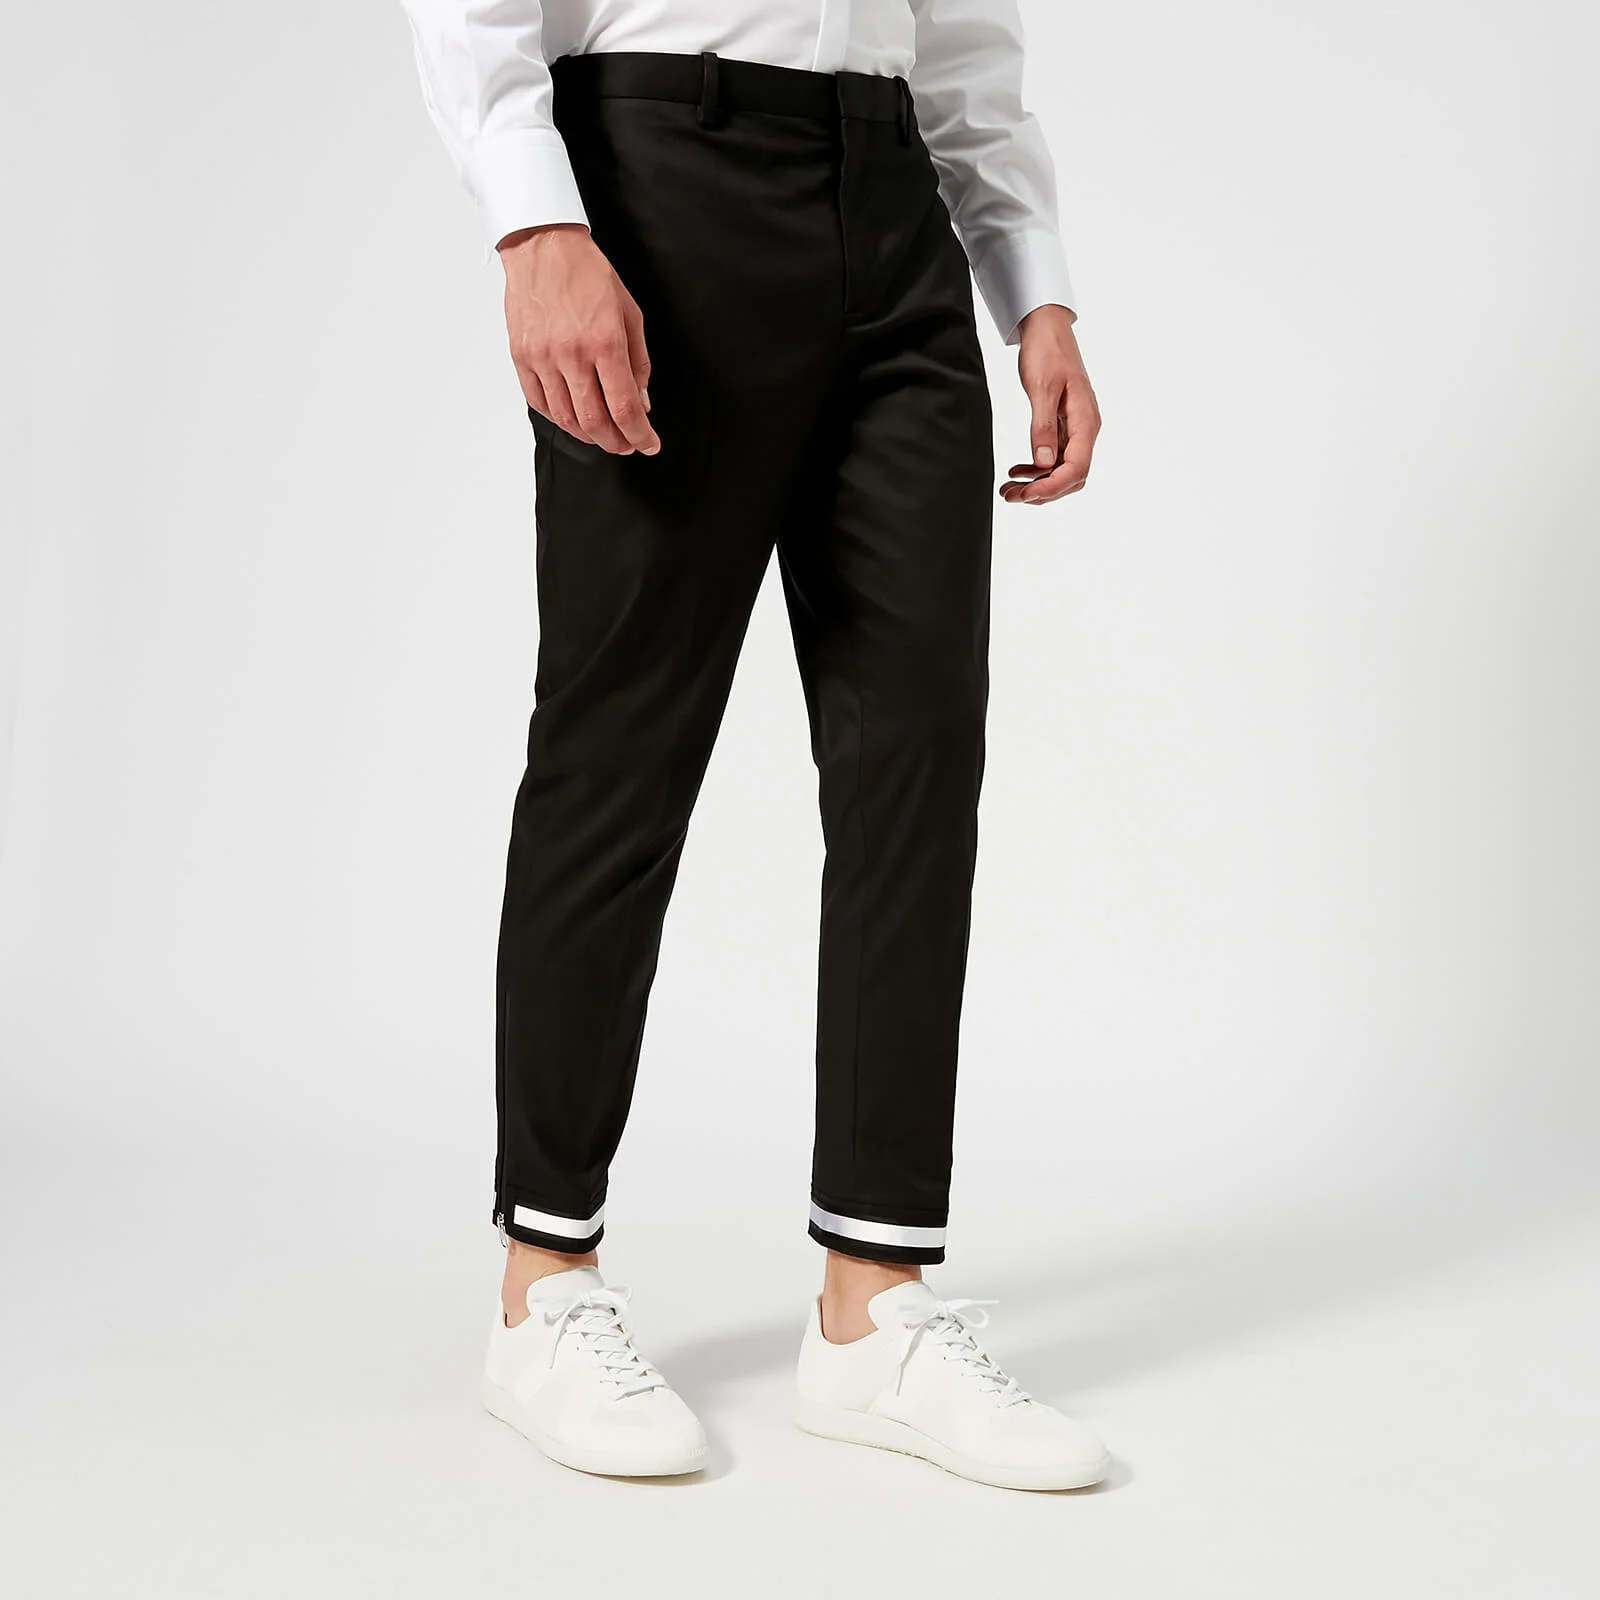 Neil Barrett Men's Cuff Taping Side Zip Pants - Black/White Image 1